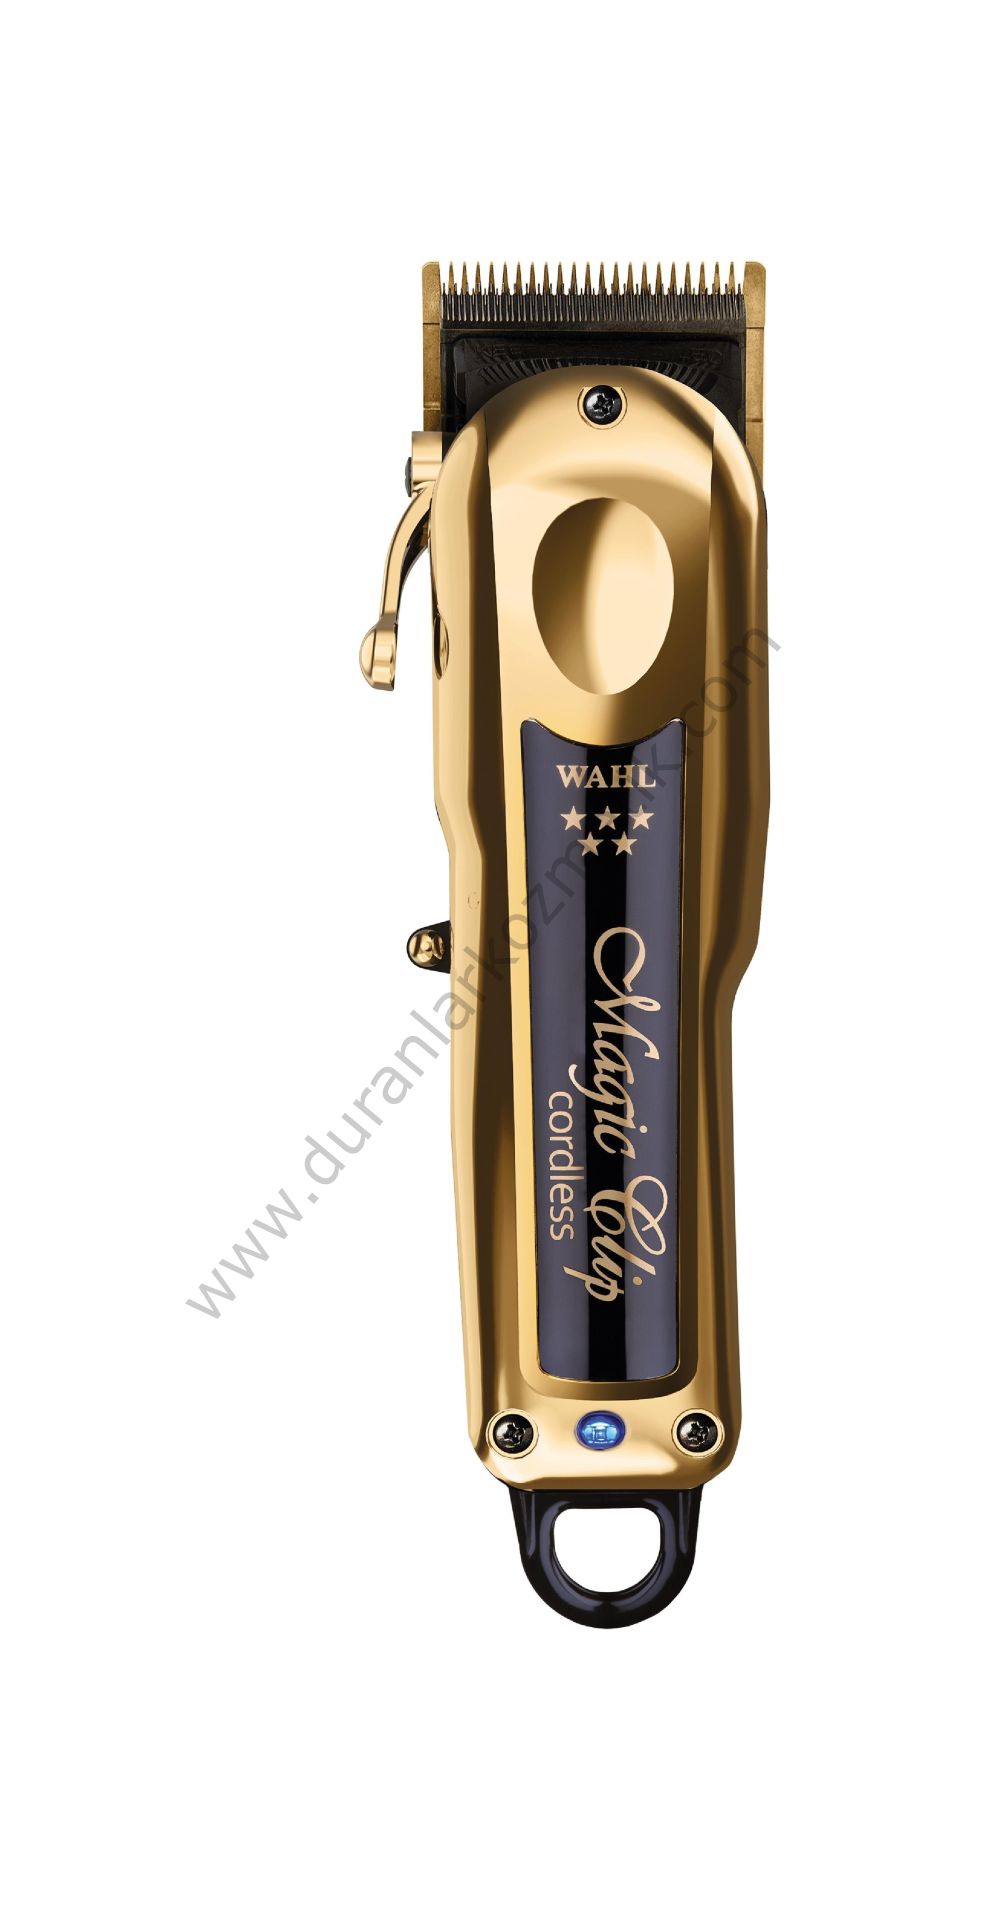 Wahl 8148 Gold Cordless Magic Clip Kablolu/Kablosuz Profesyonel Saç Kesme makinası